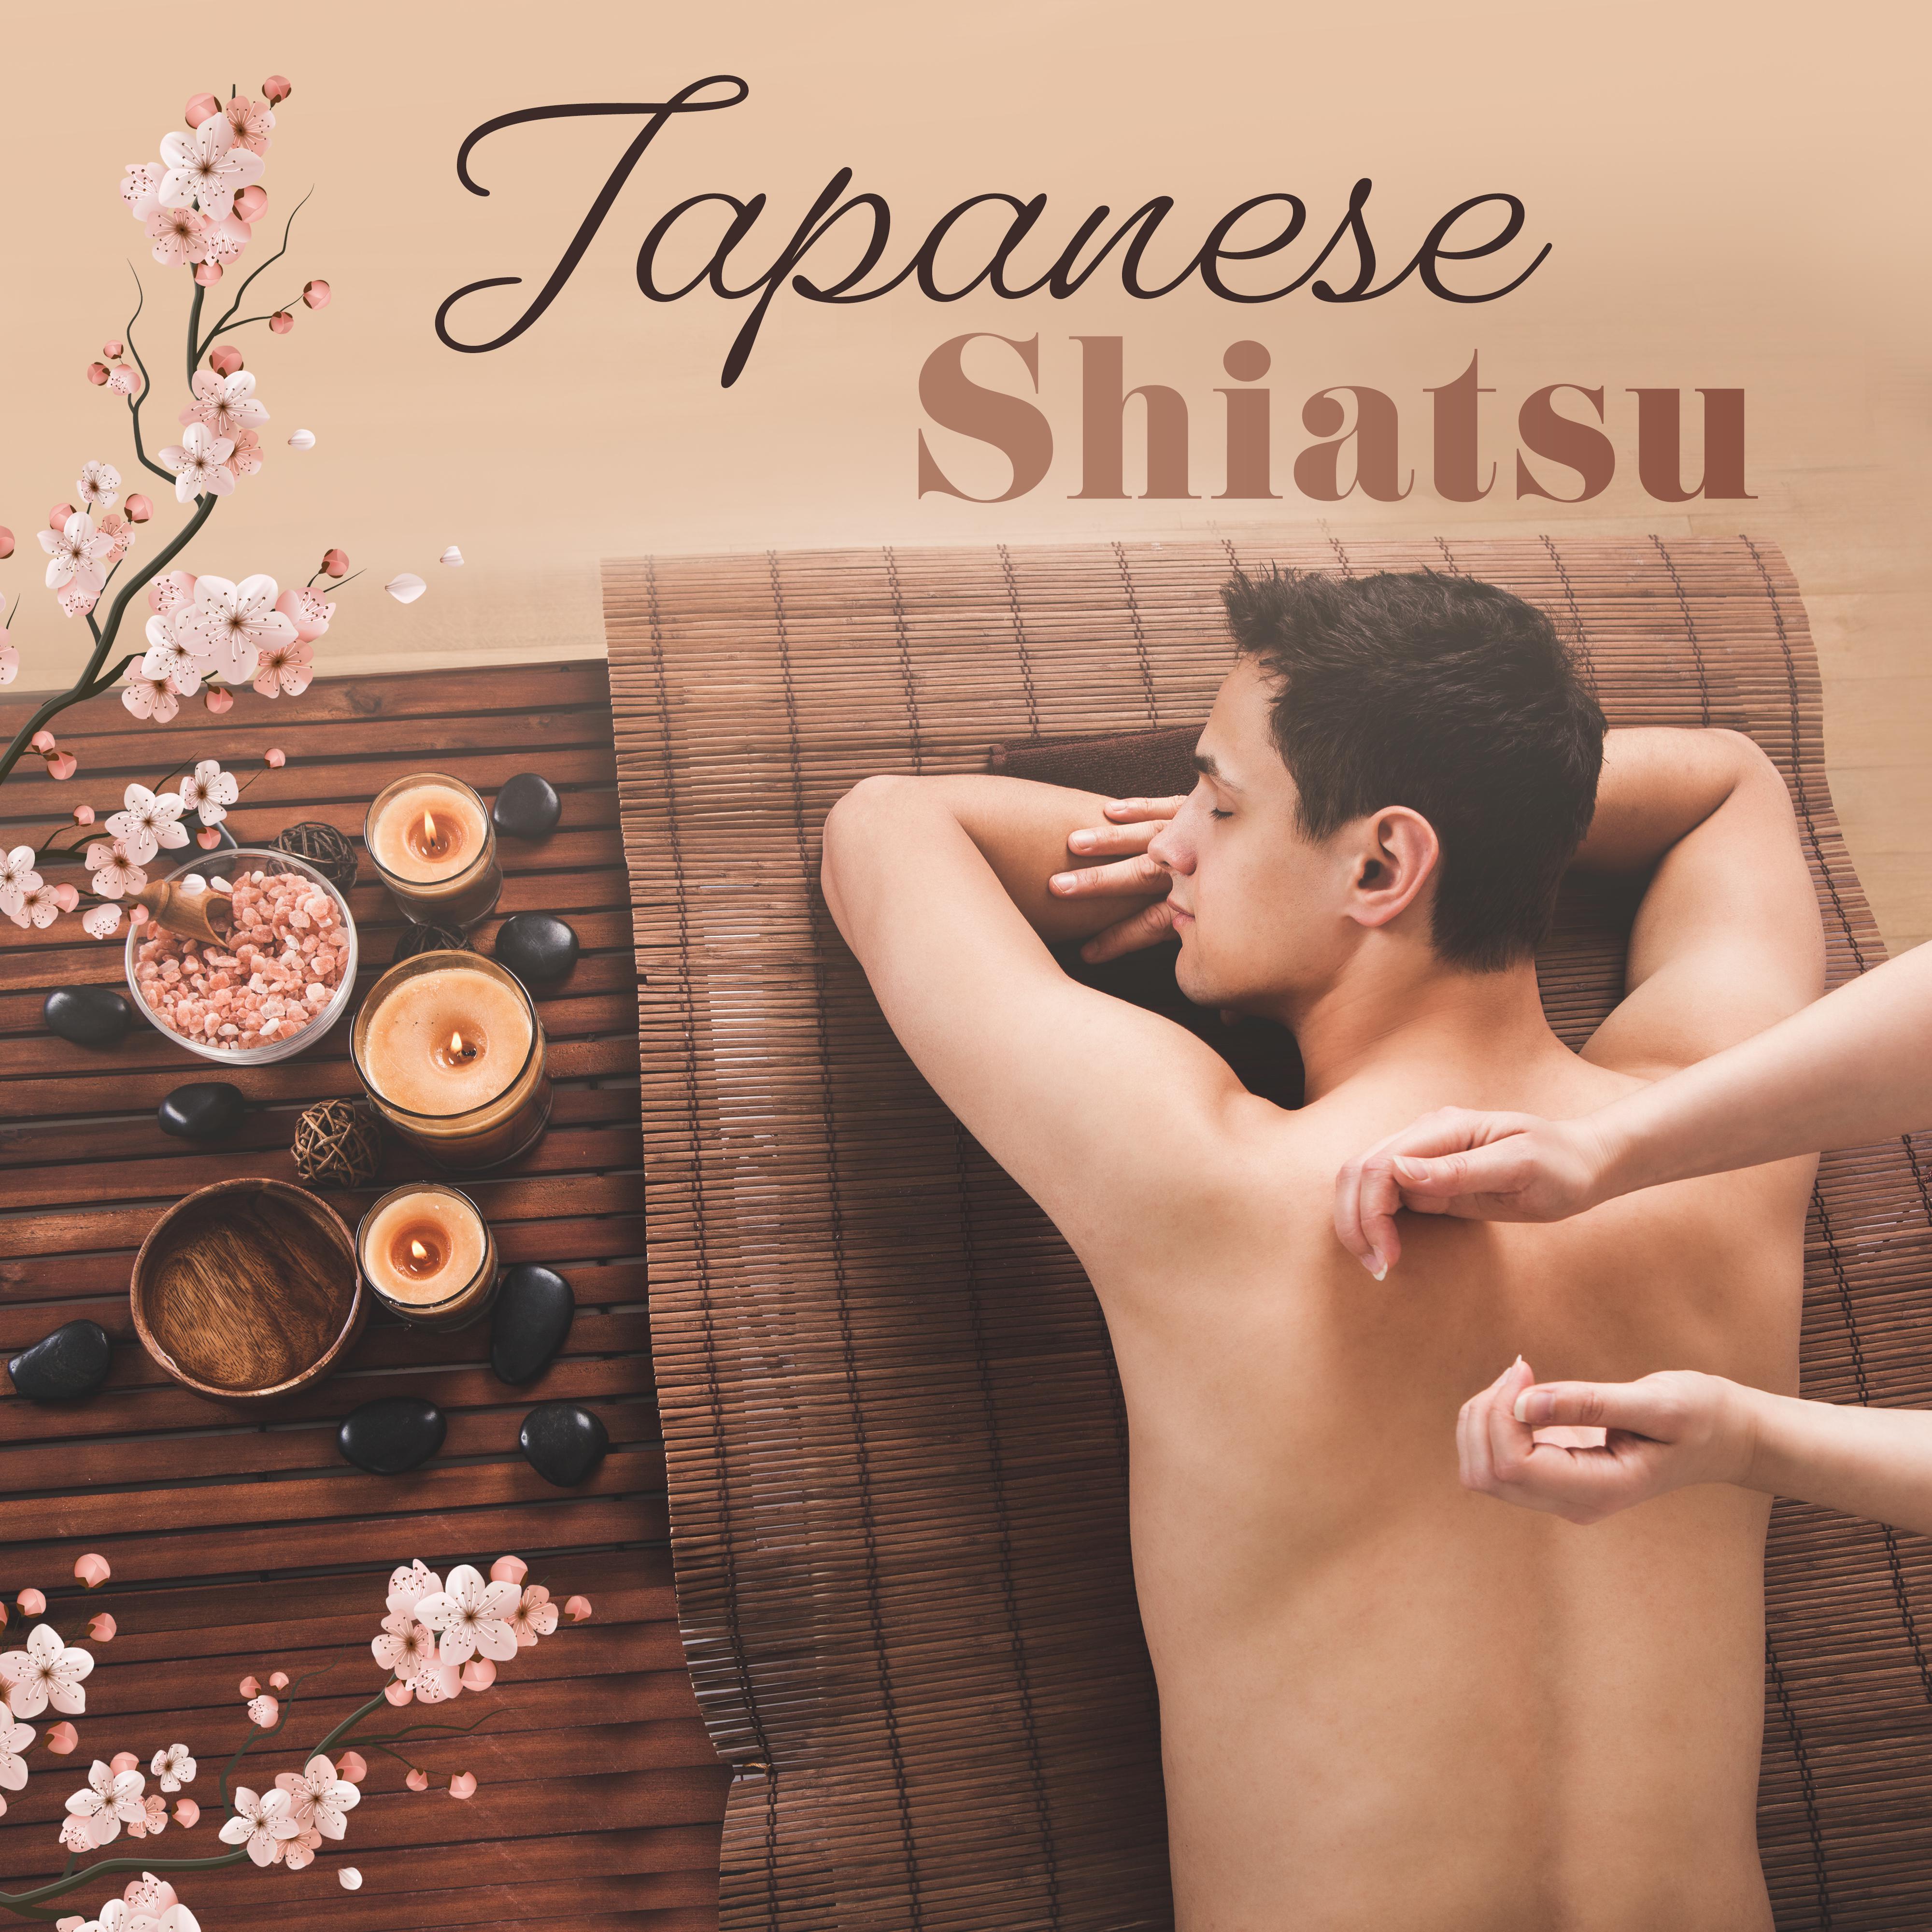 Japanese Shiatsu - Music for Massage, Spa, Therapy and Treatment